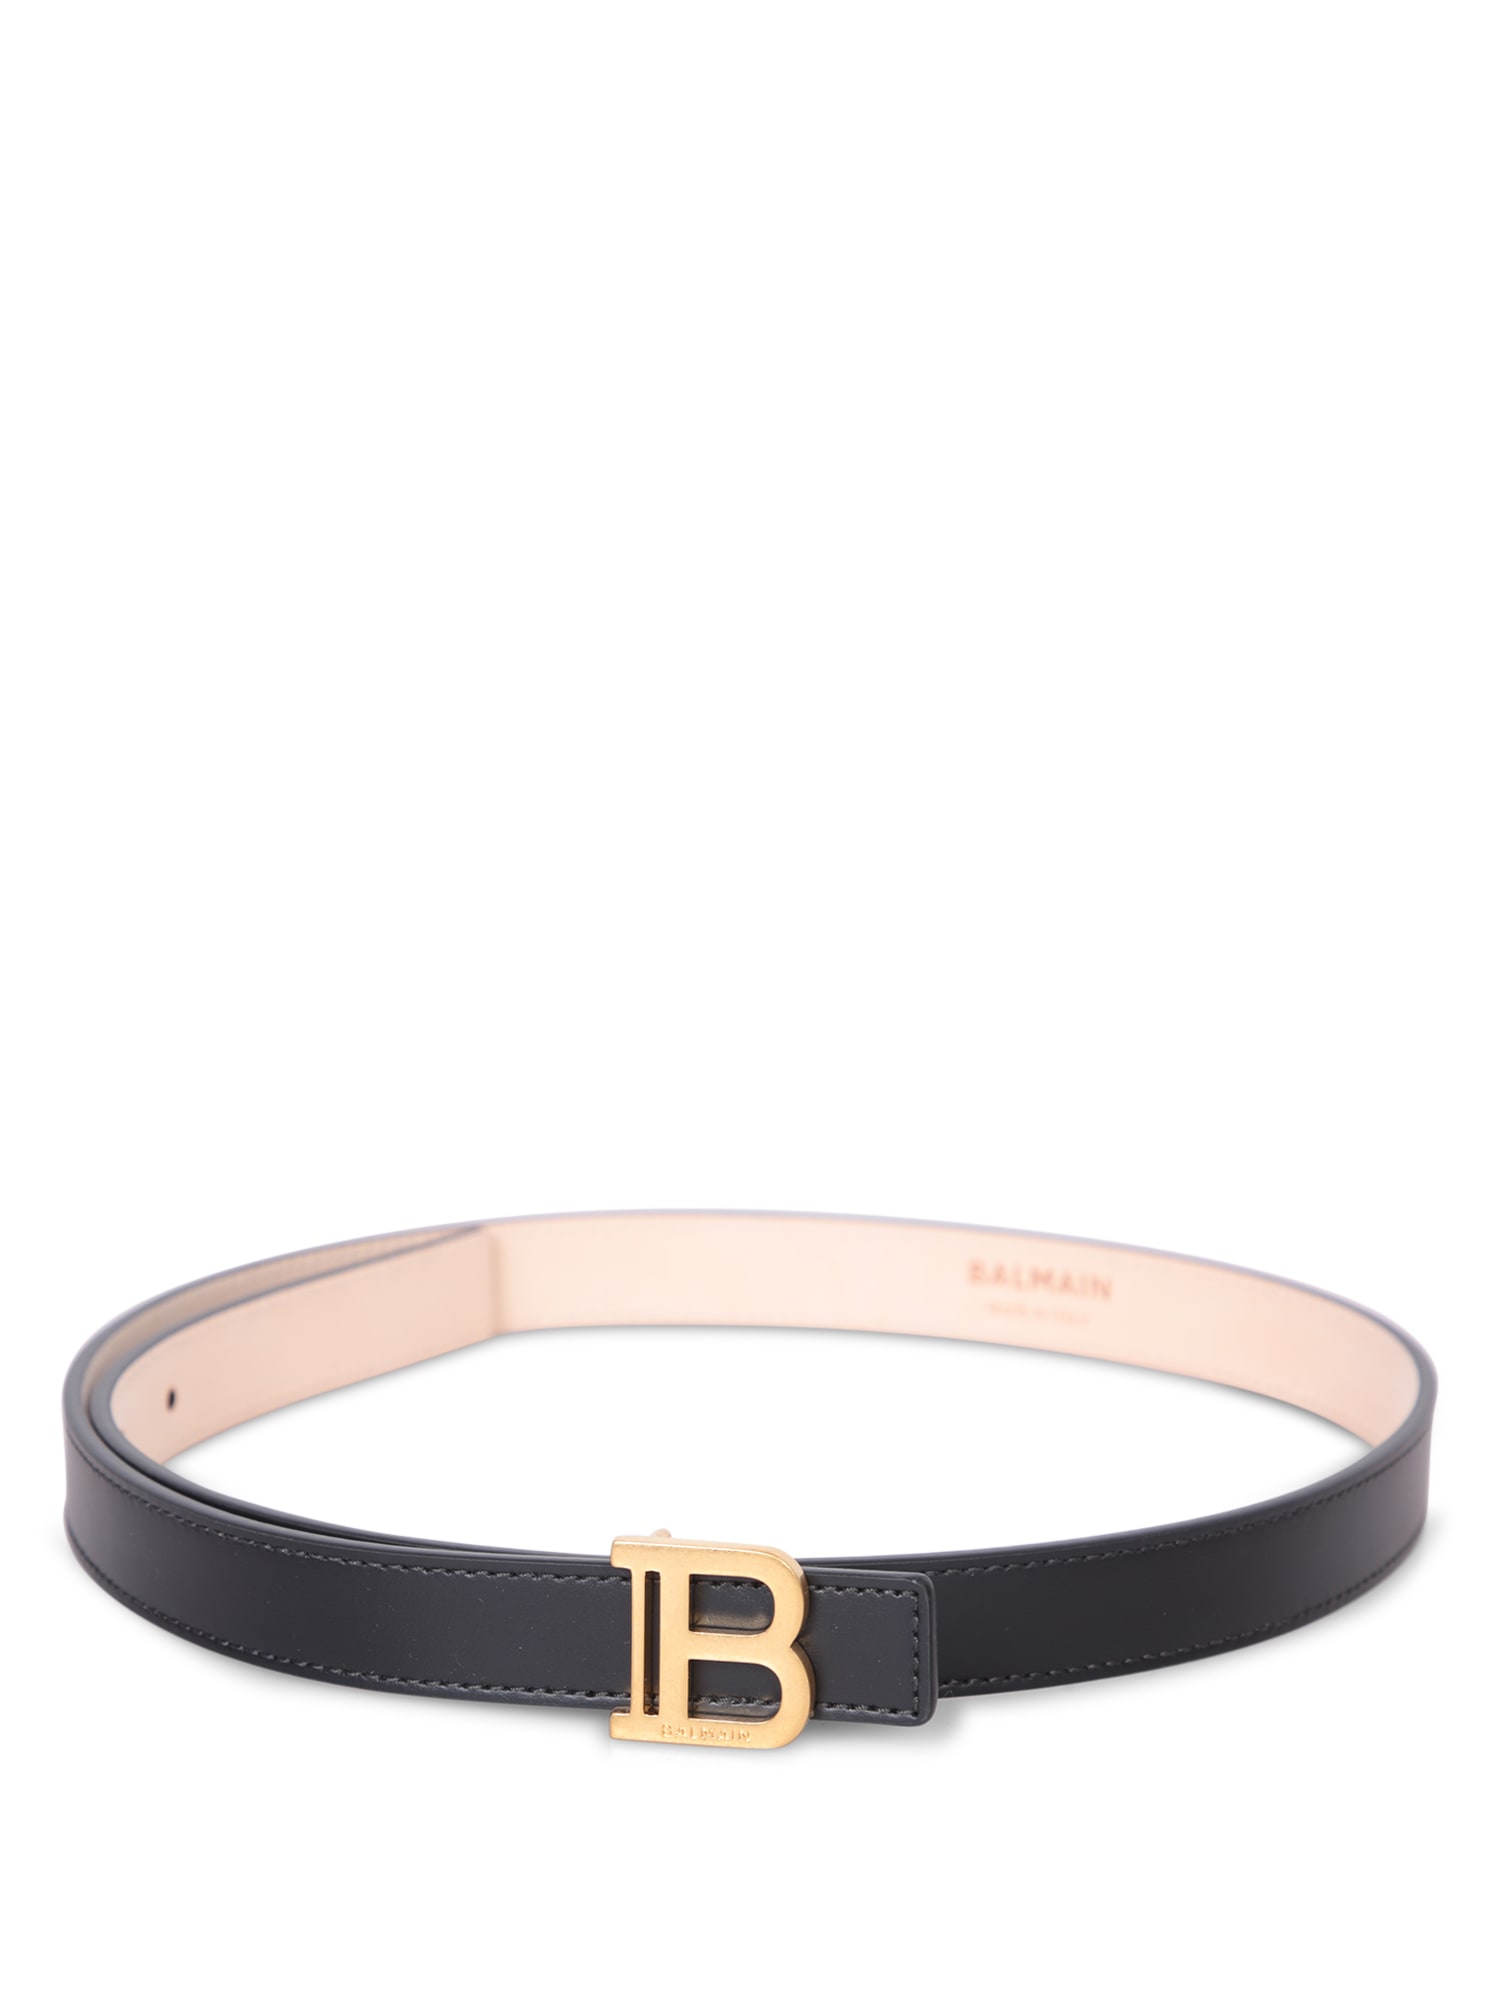 Shop Balmain B Black Leather Belt